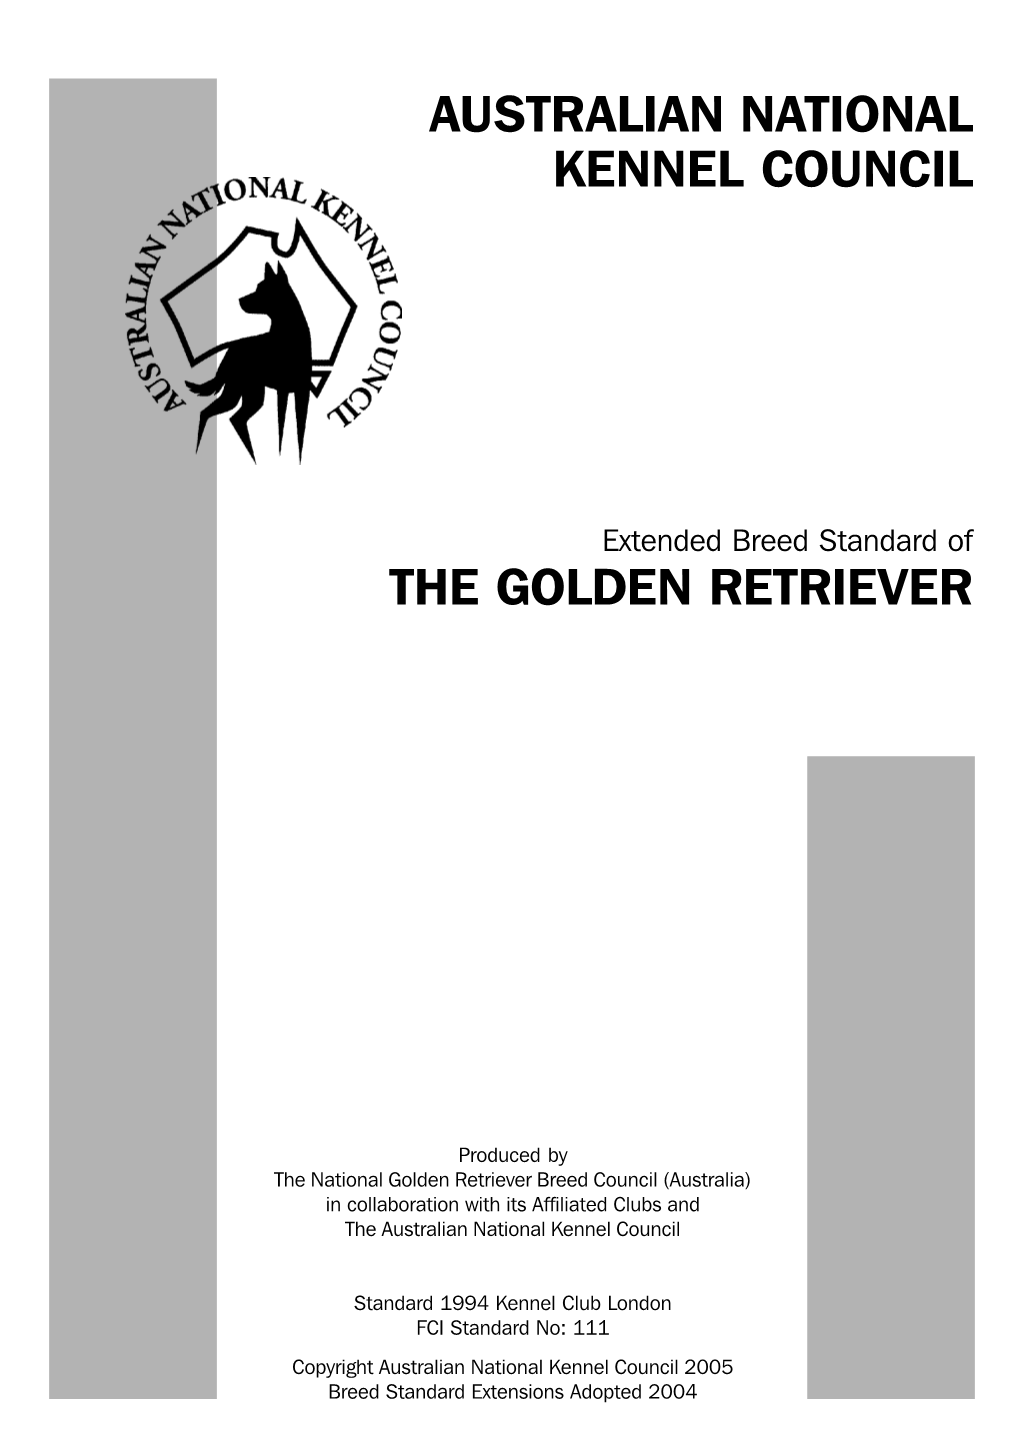 Breed Standard of the GOLDEN RETRIEVER